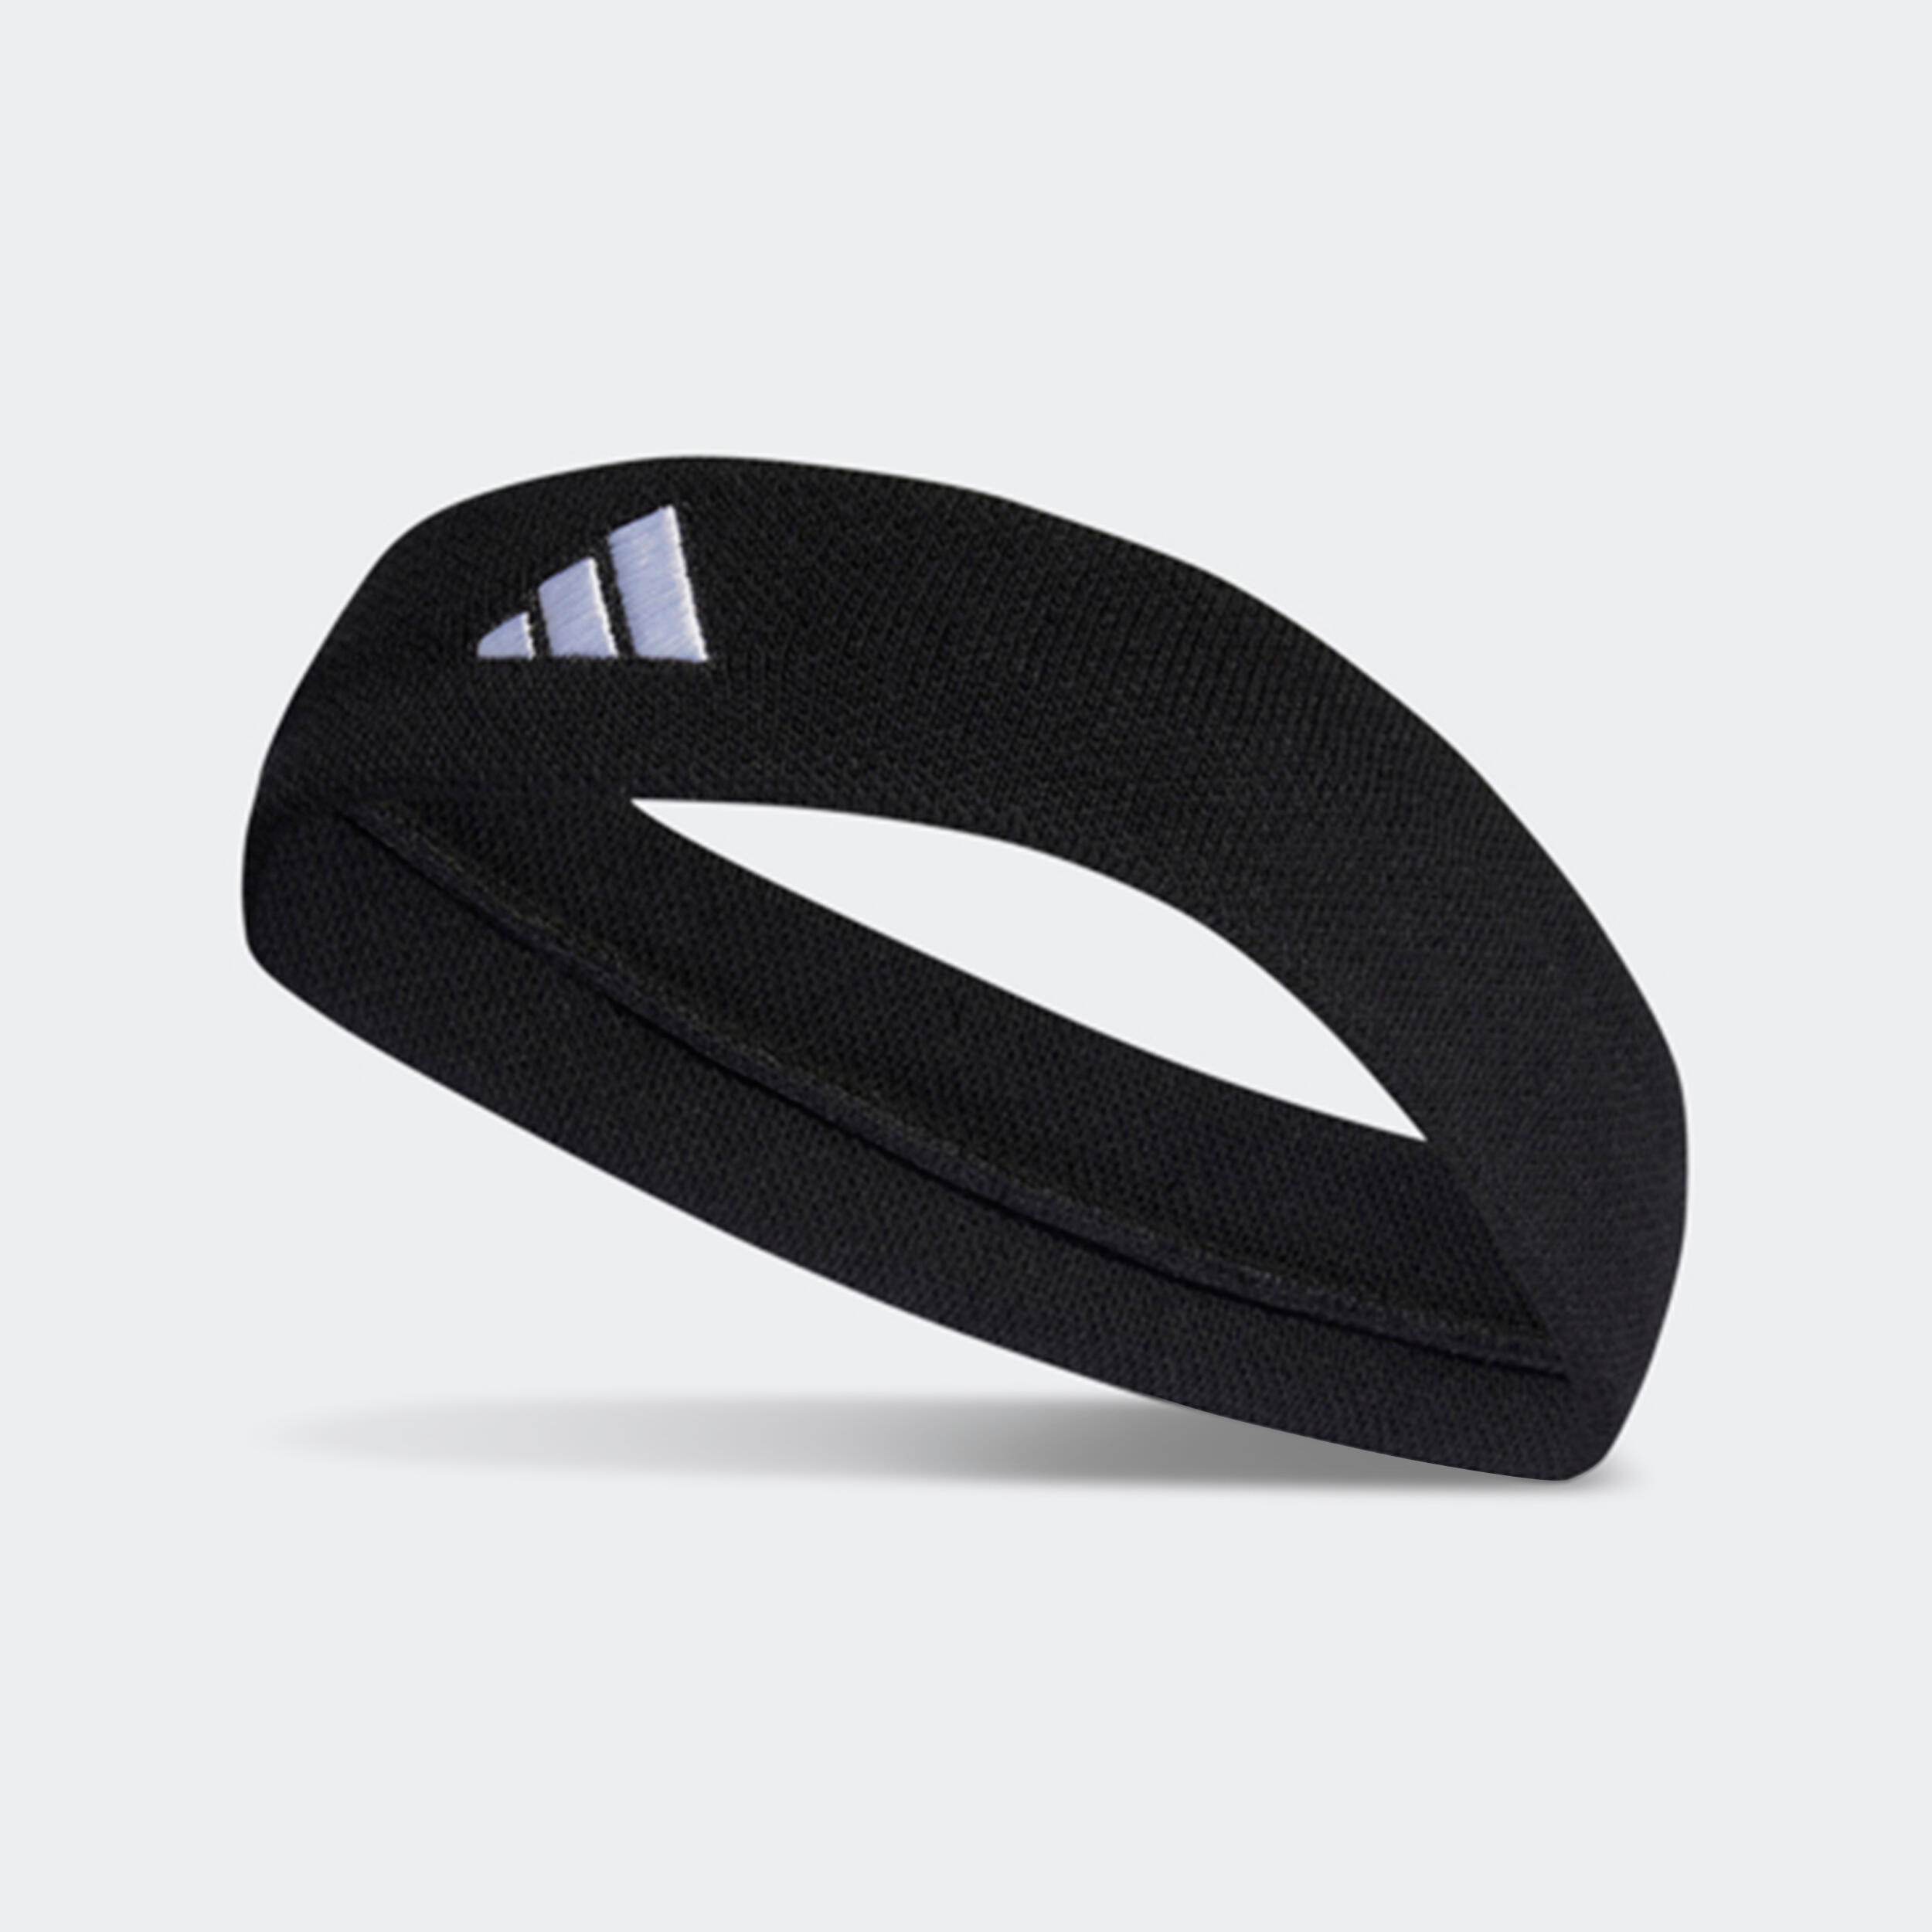 ADIDAS Sports Headband - Black